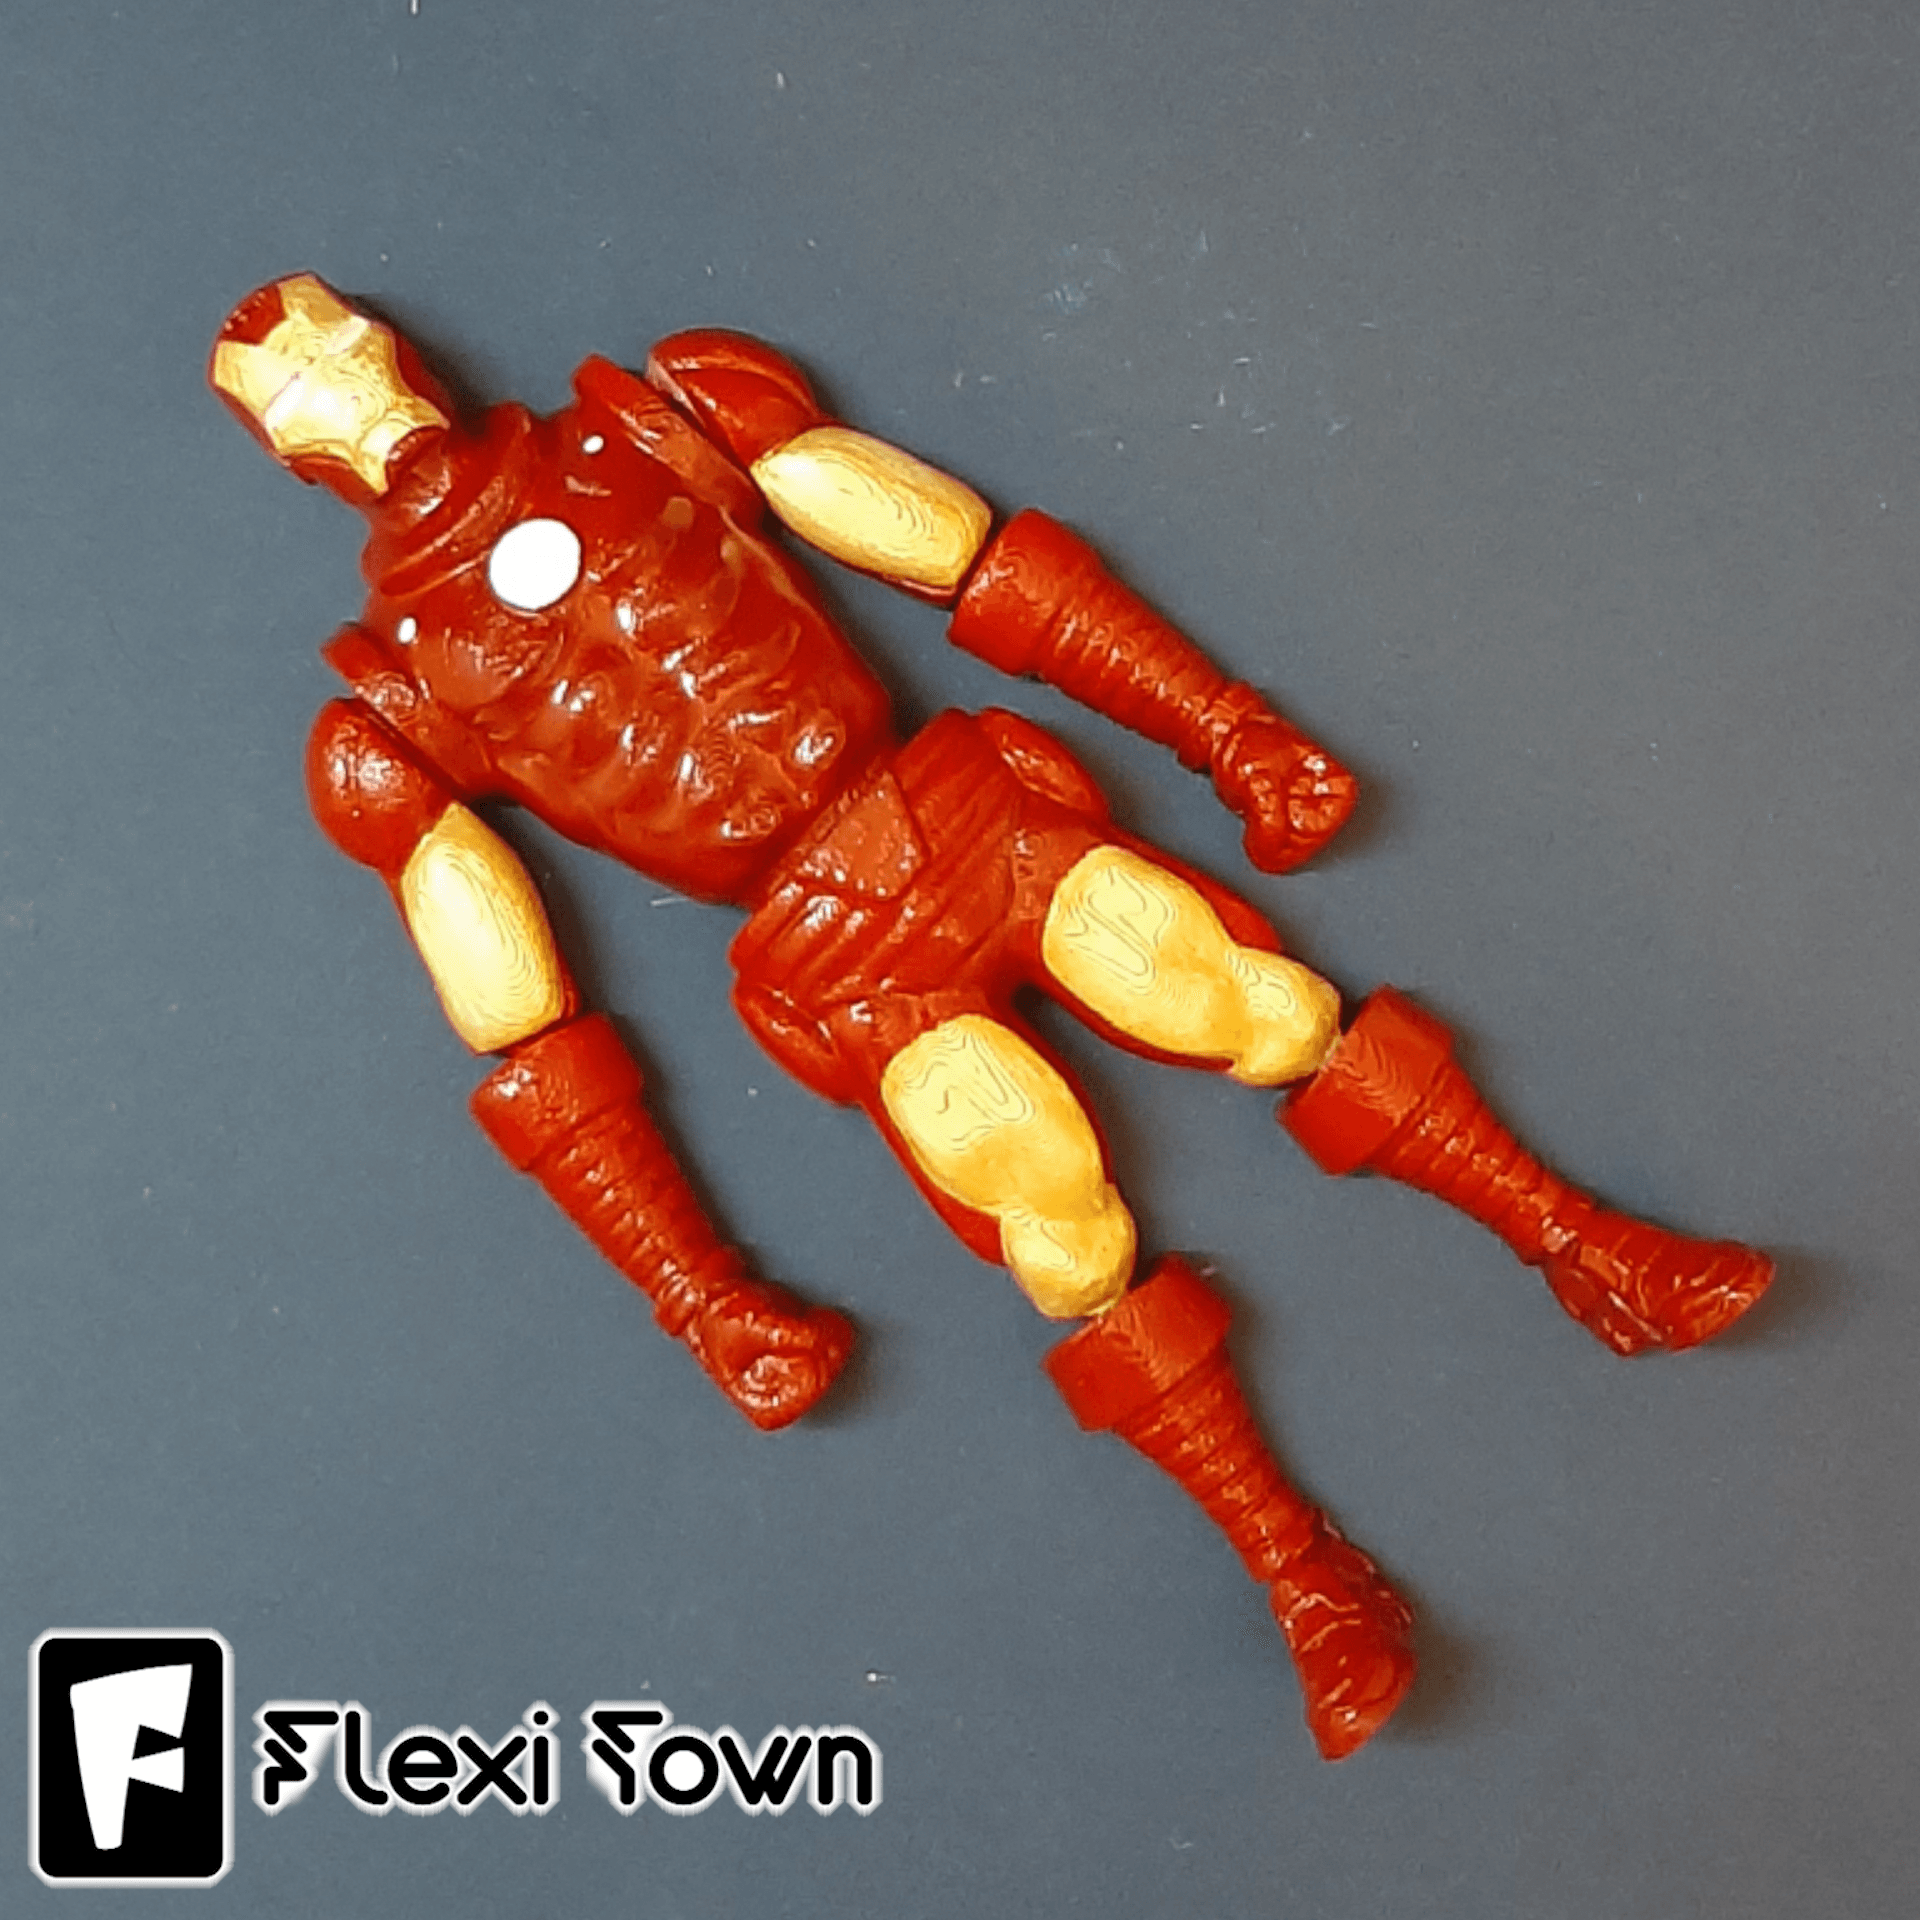 Flexi Print-in-Place Ironman 3d model